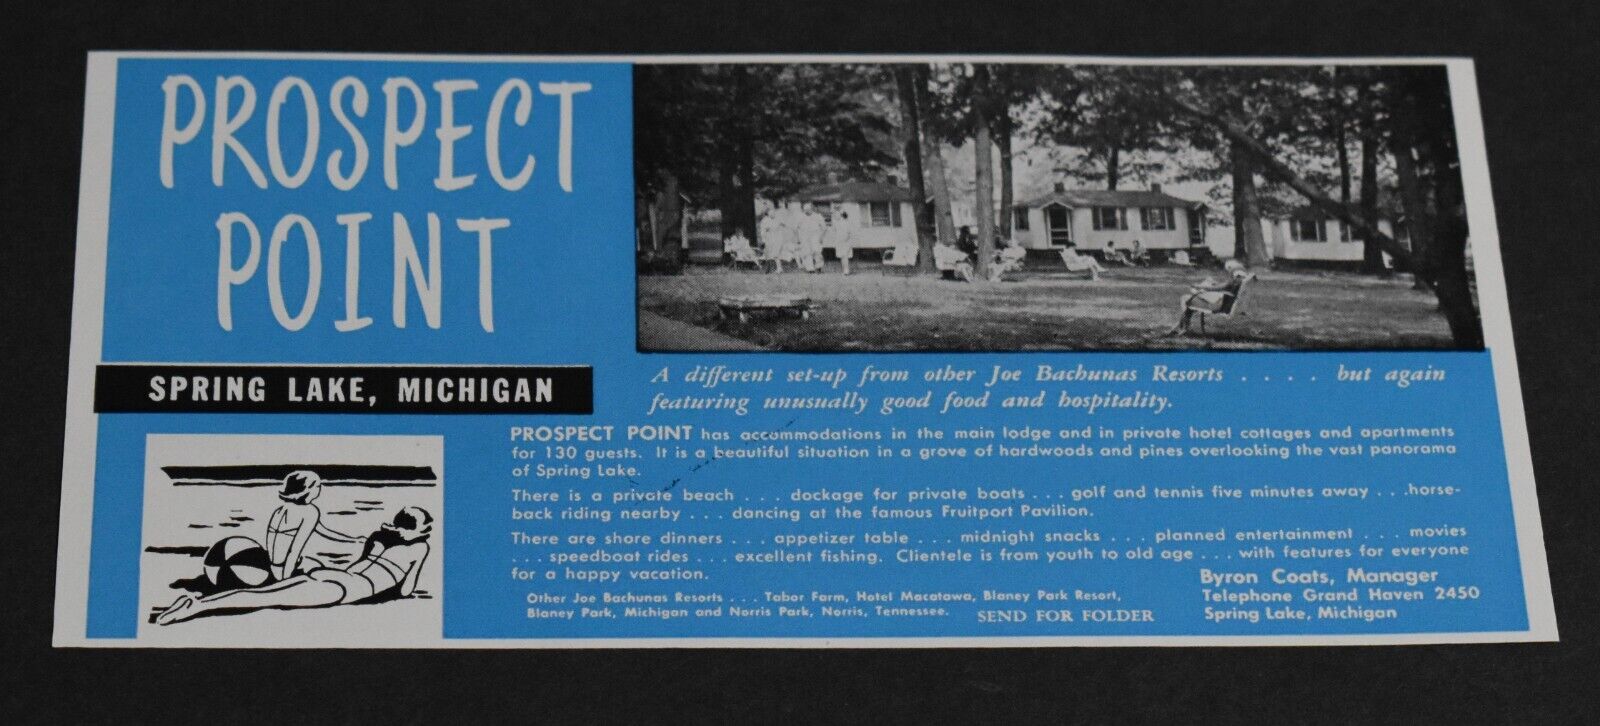 1951 Print Ad Michigan Spring lake Prospect Point Byron Coats Bachunas Resorts